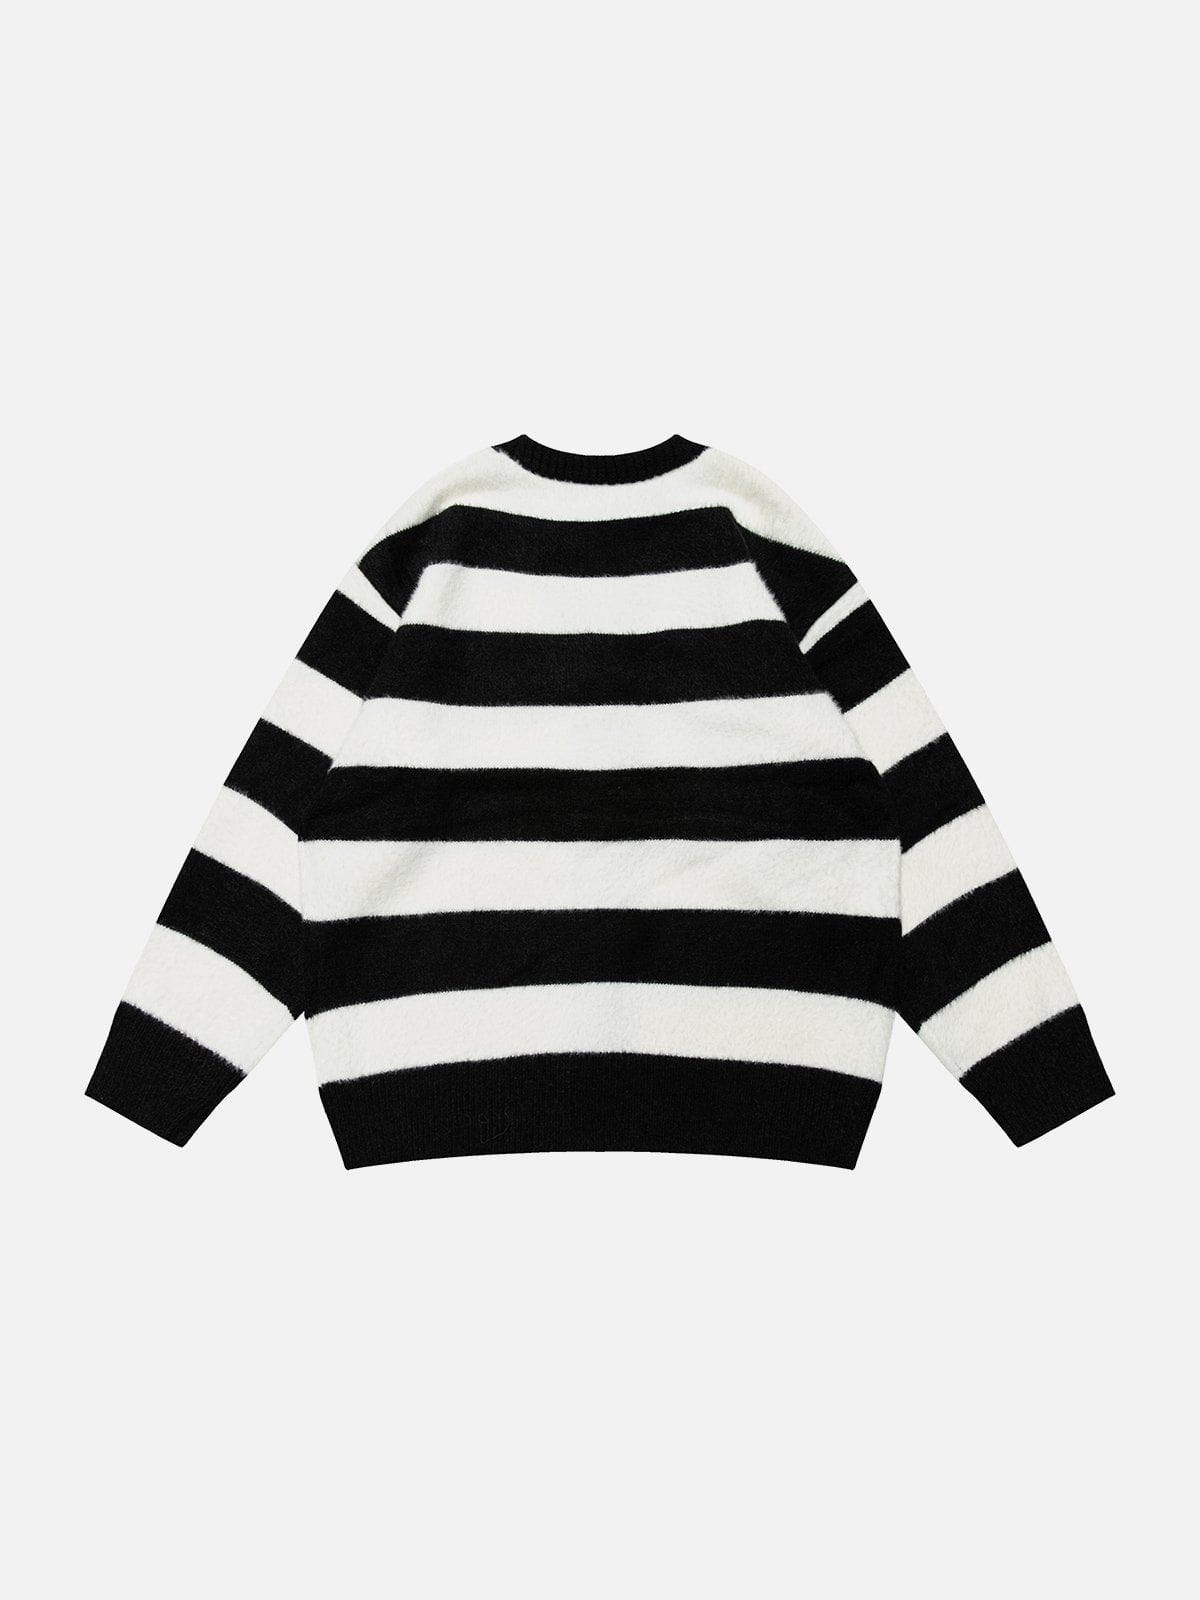 Majesda® - Stripes Mohair Cardigan outfit ideas streetwear fashion